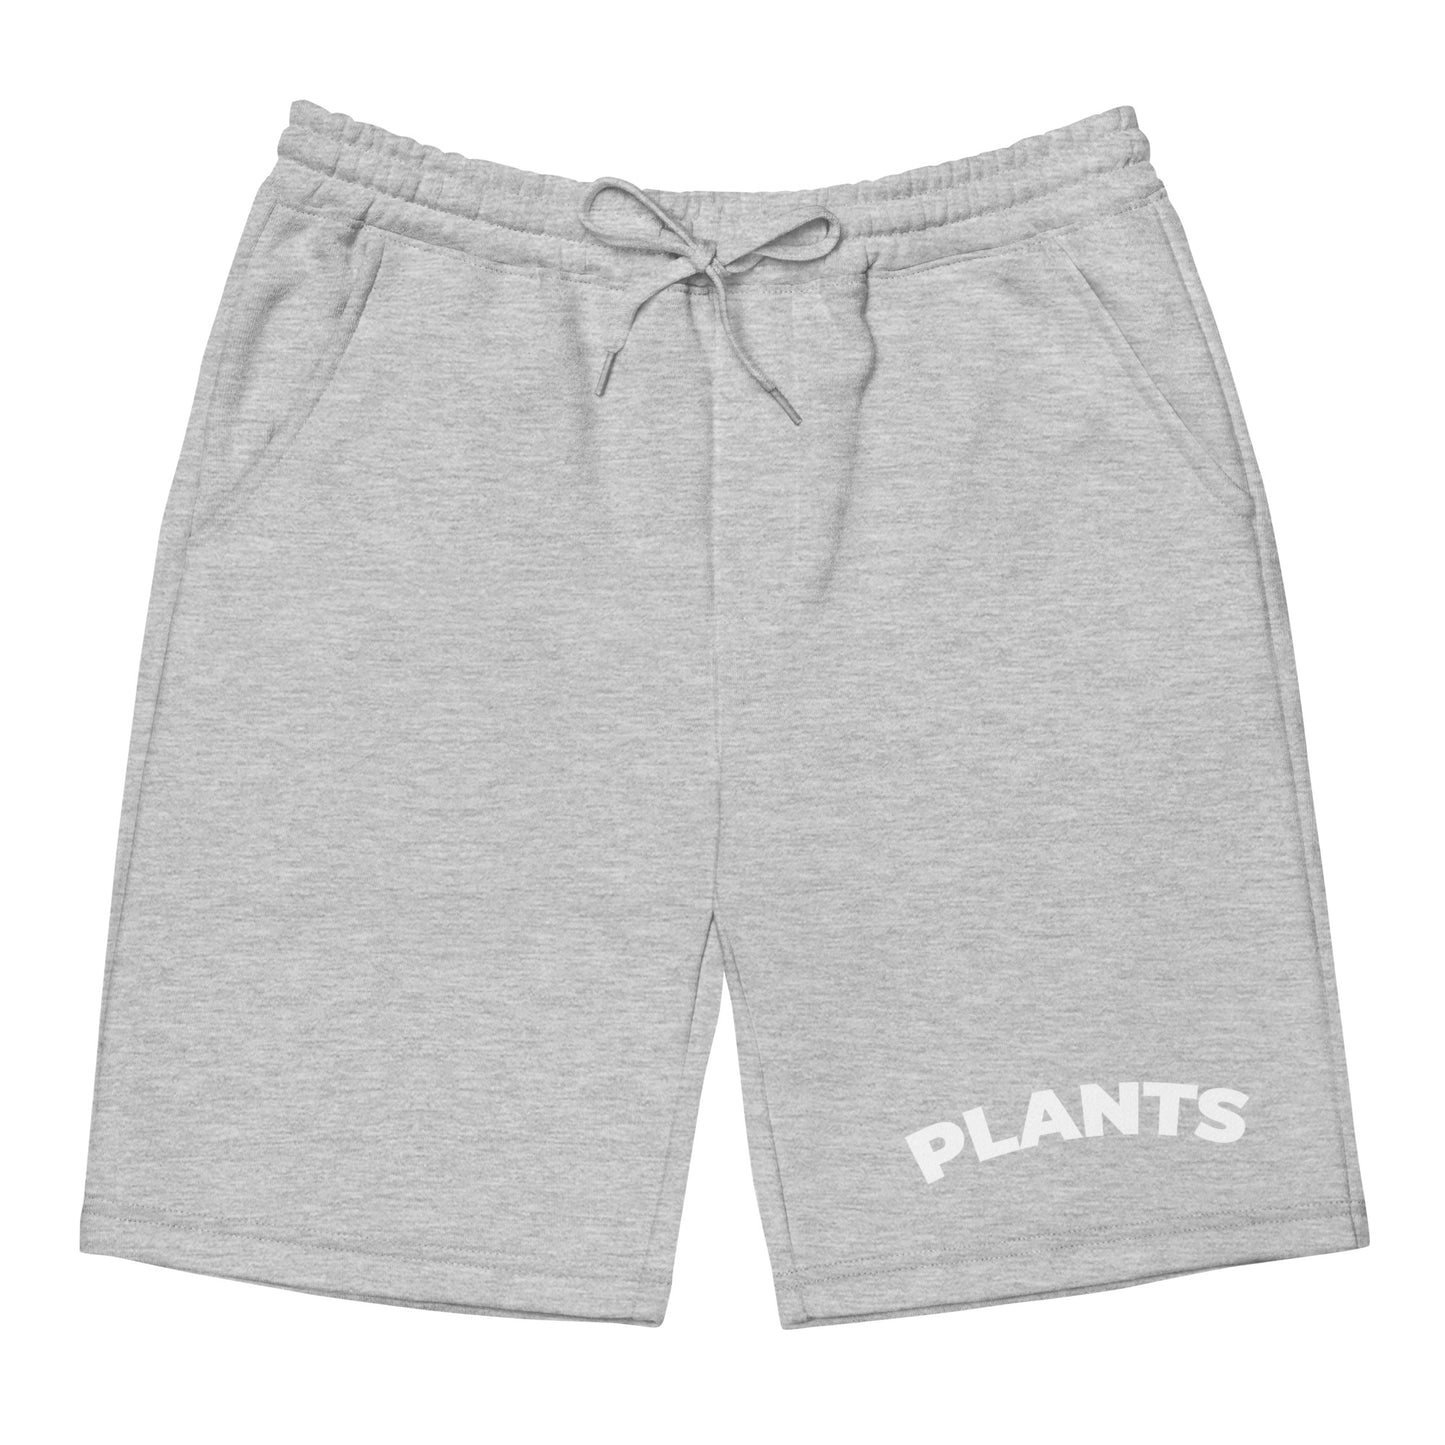 plants unisex grey shorts